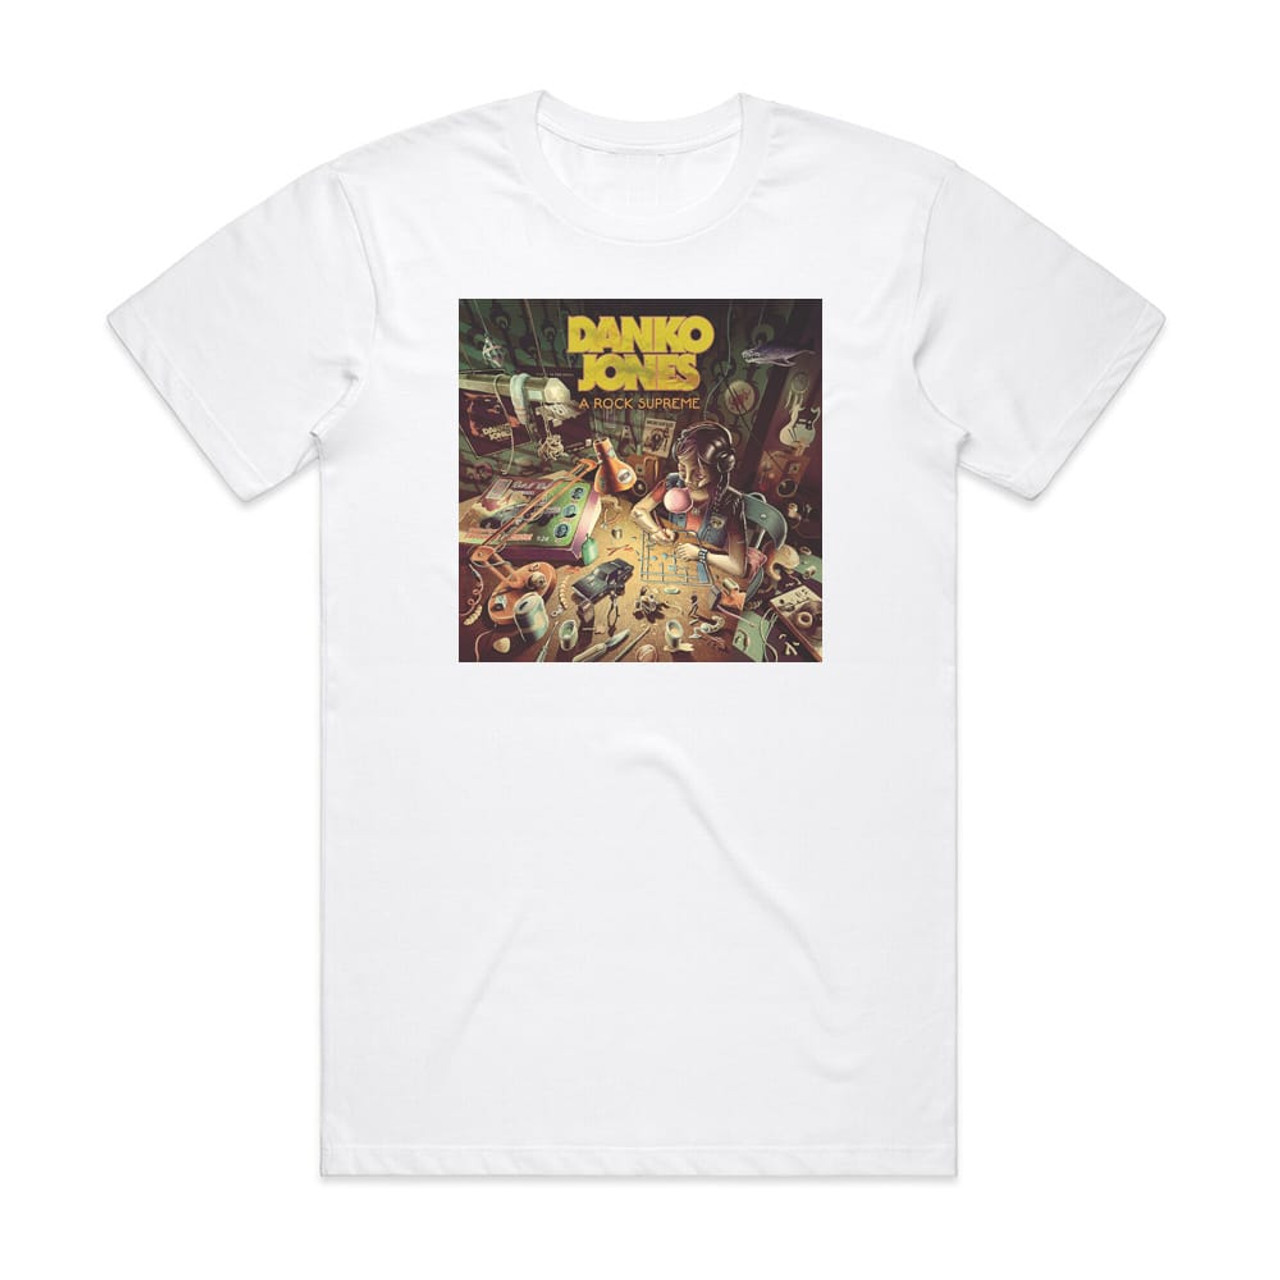 Danko Jones A Rock Supreme Album Cover T-Shirt White